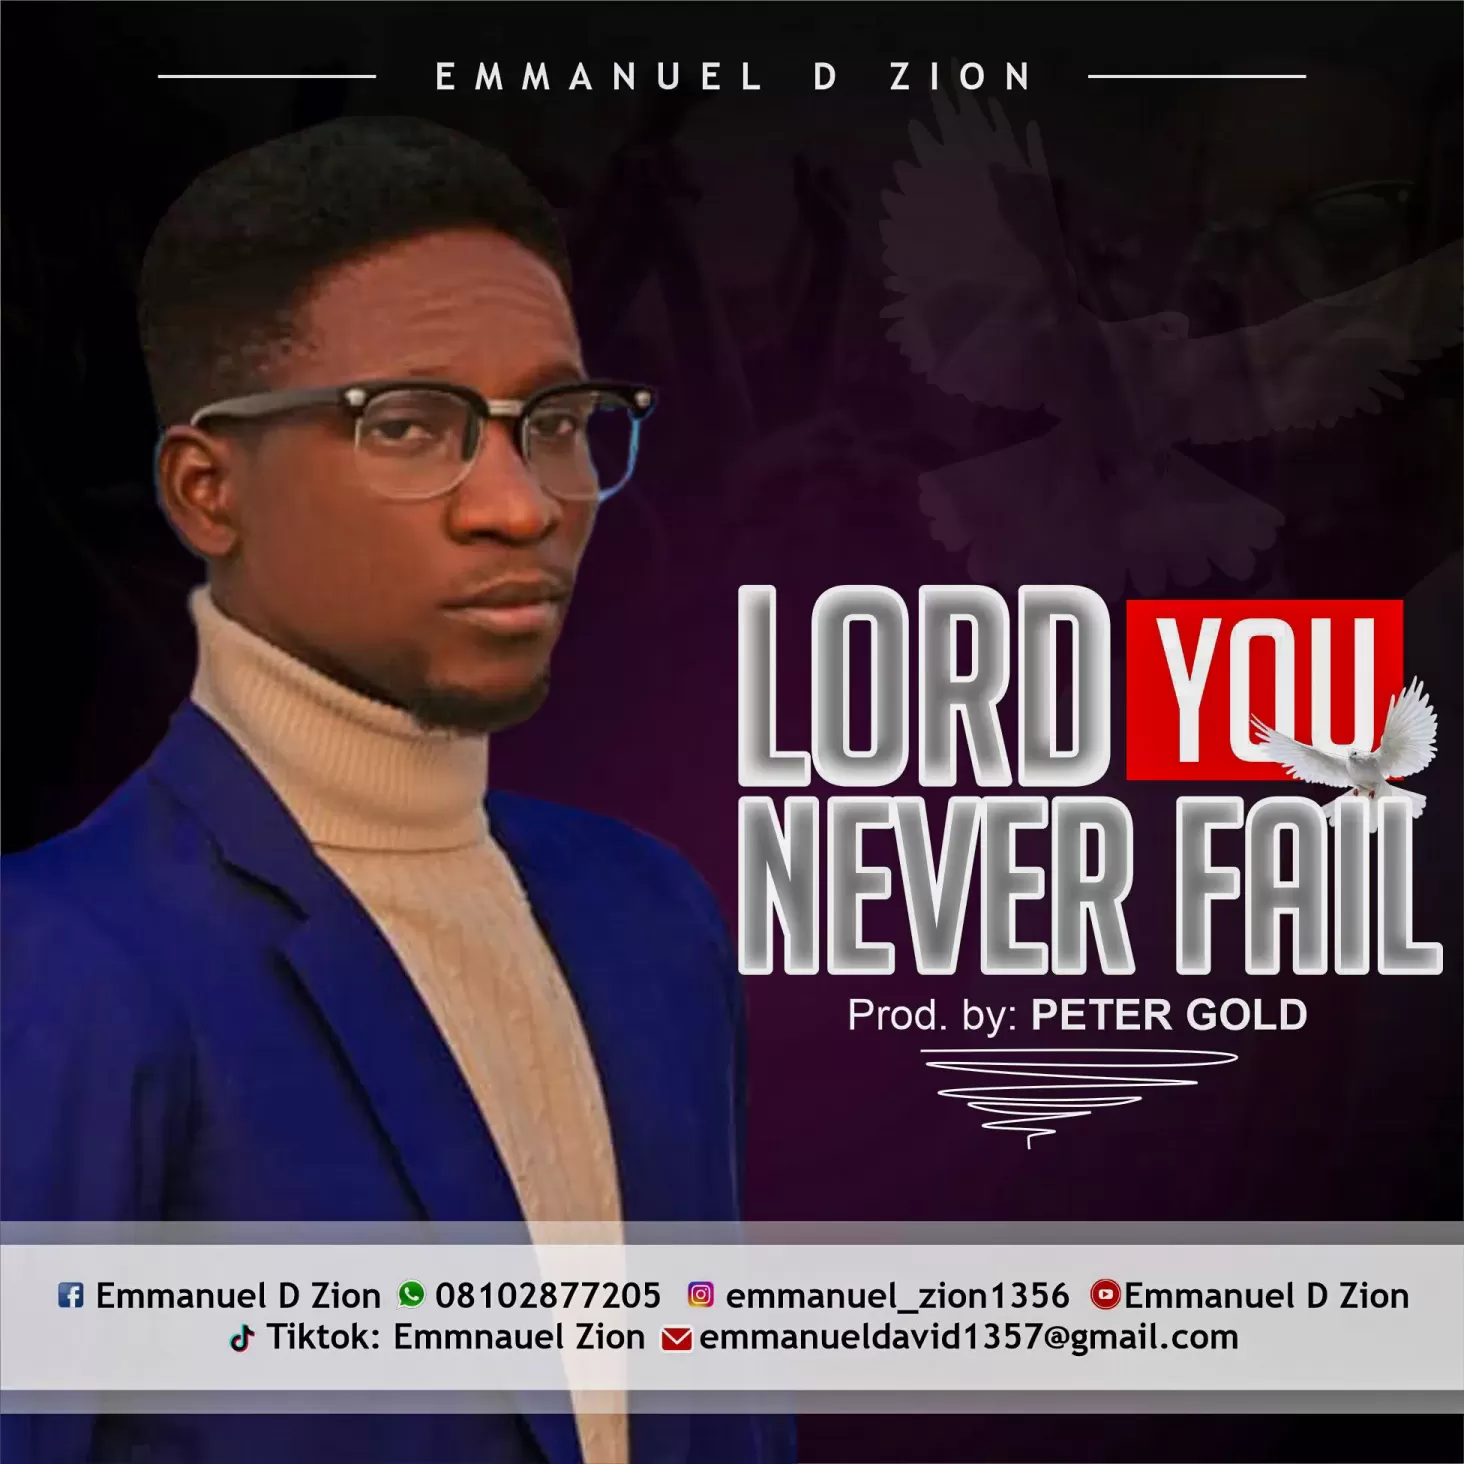 Emmanuel D Zion - Lord you never fail